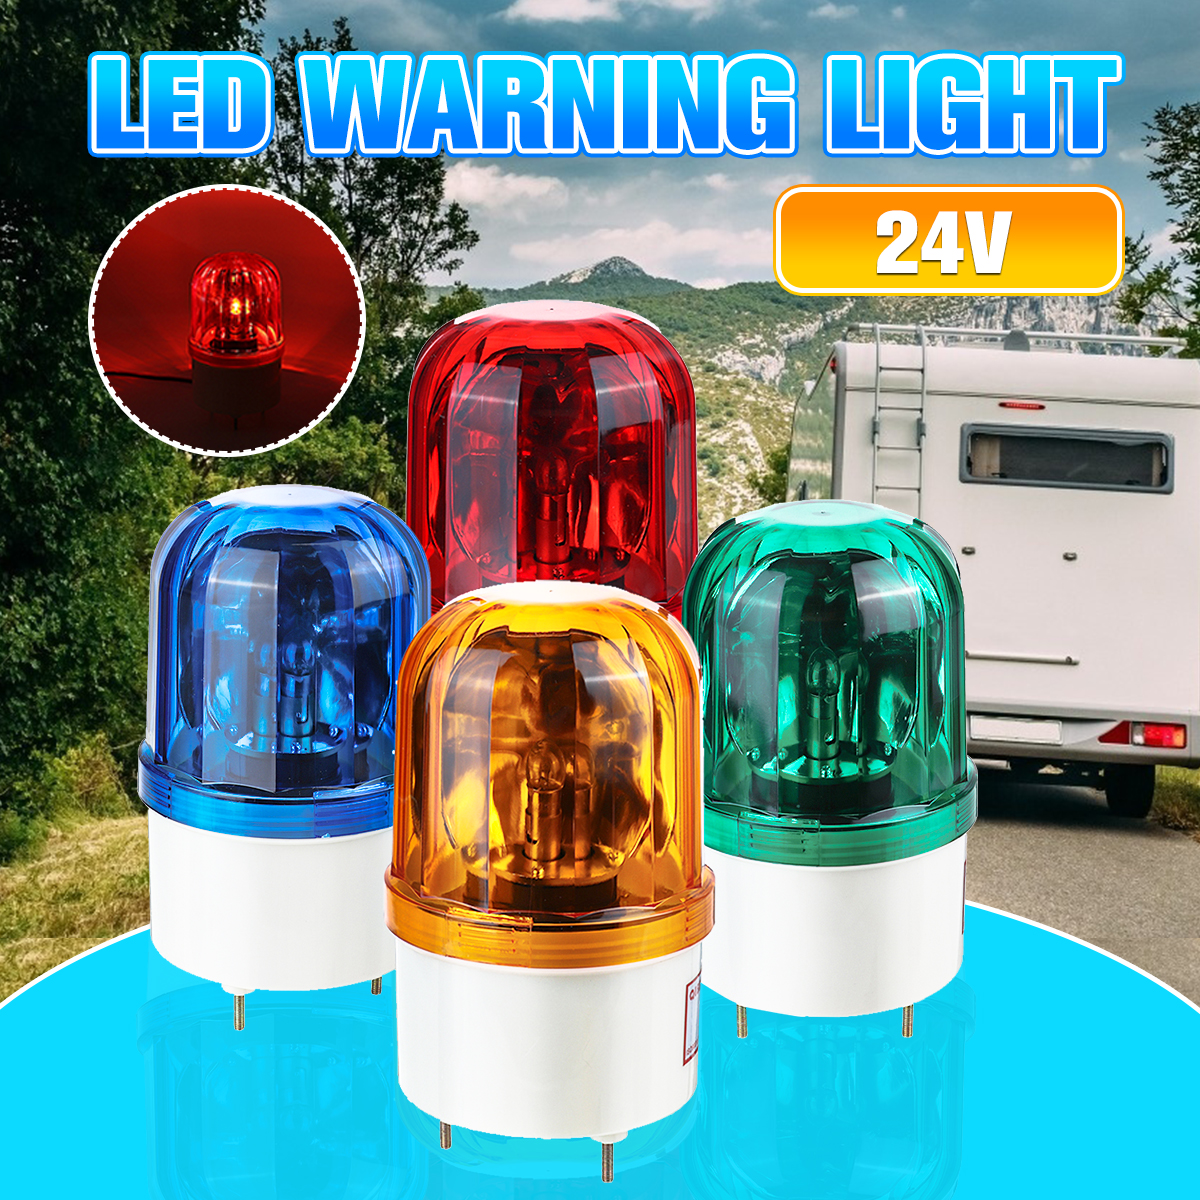 24V-Road-Traffic-Warning-Light-Beacon-LED-Emergency-Flashing-Recover-Safety-1766636-1